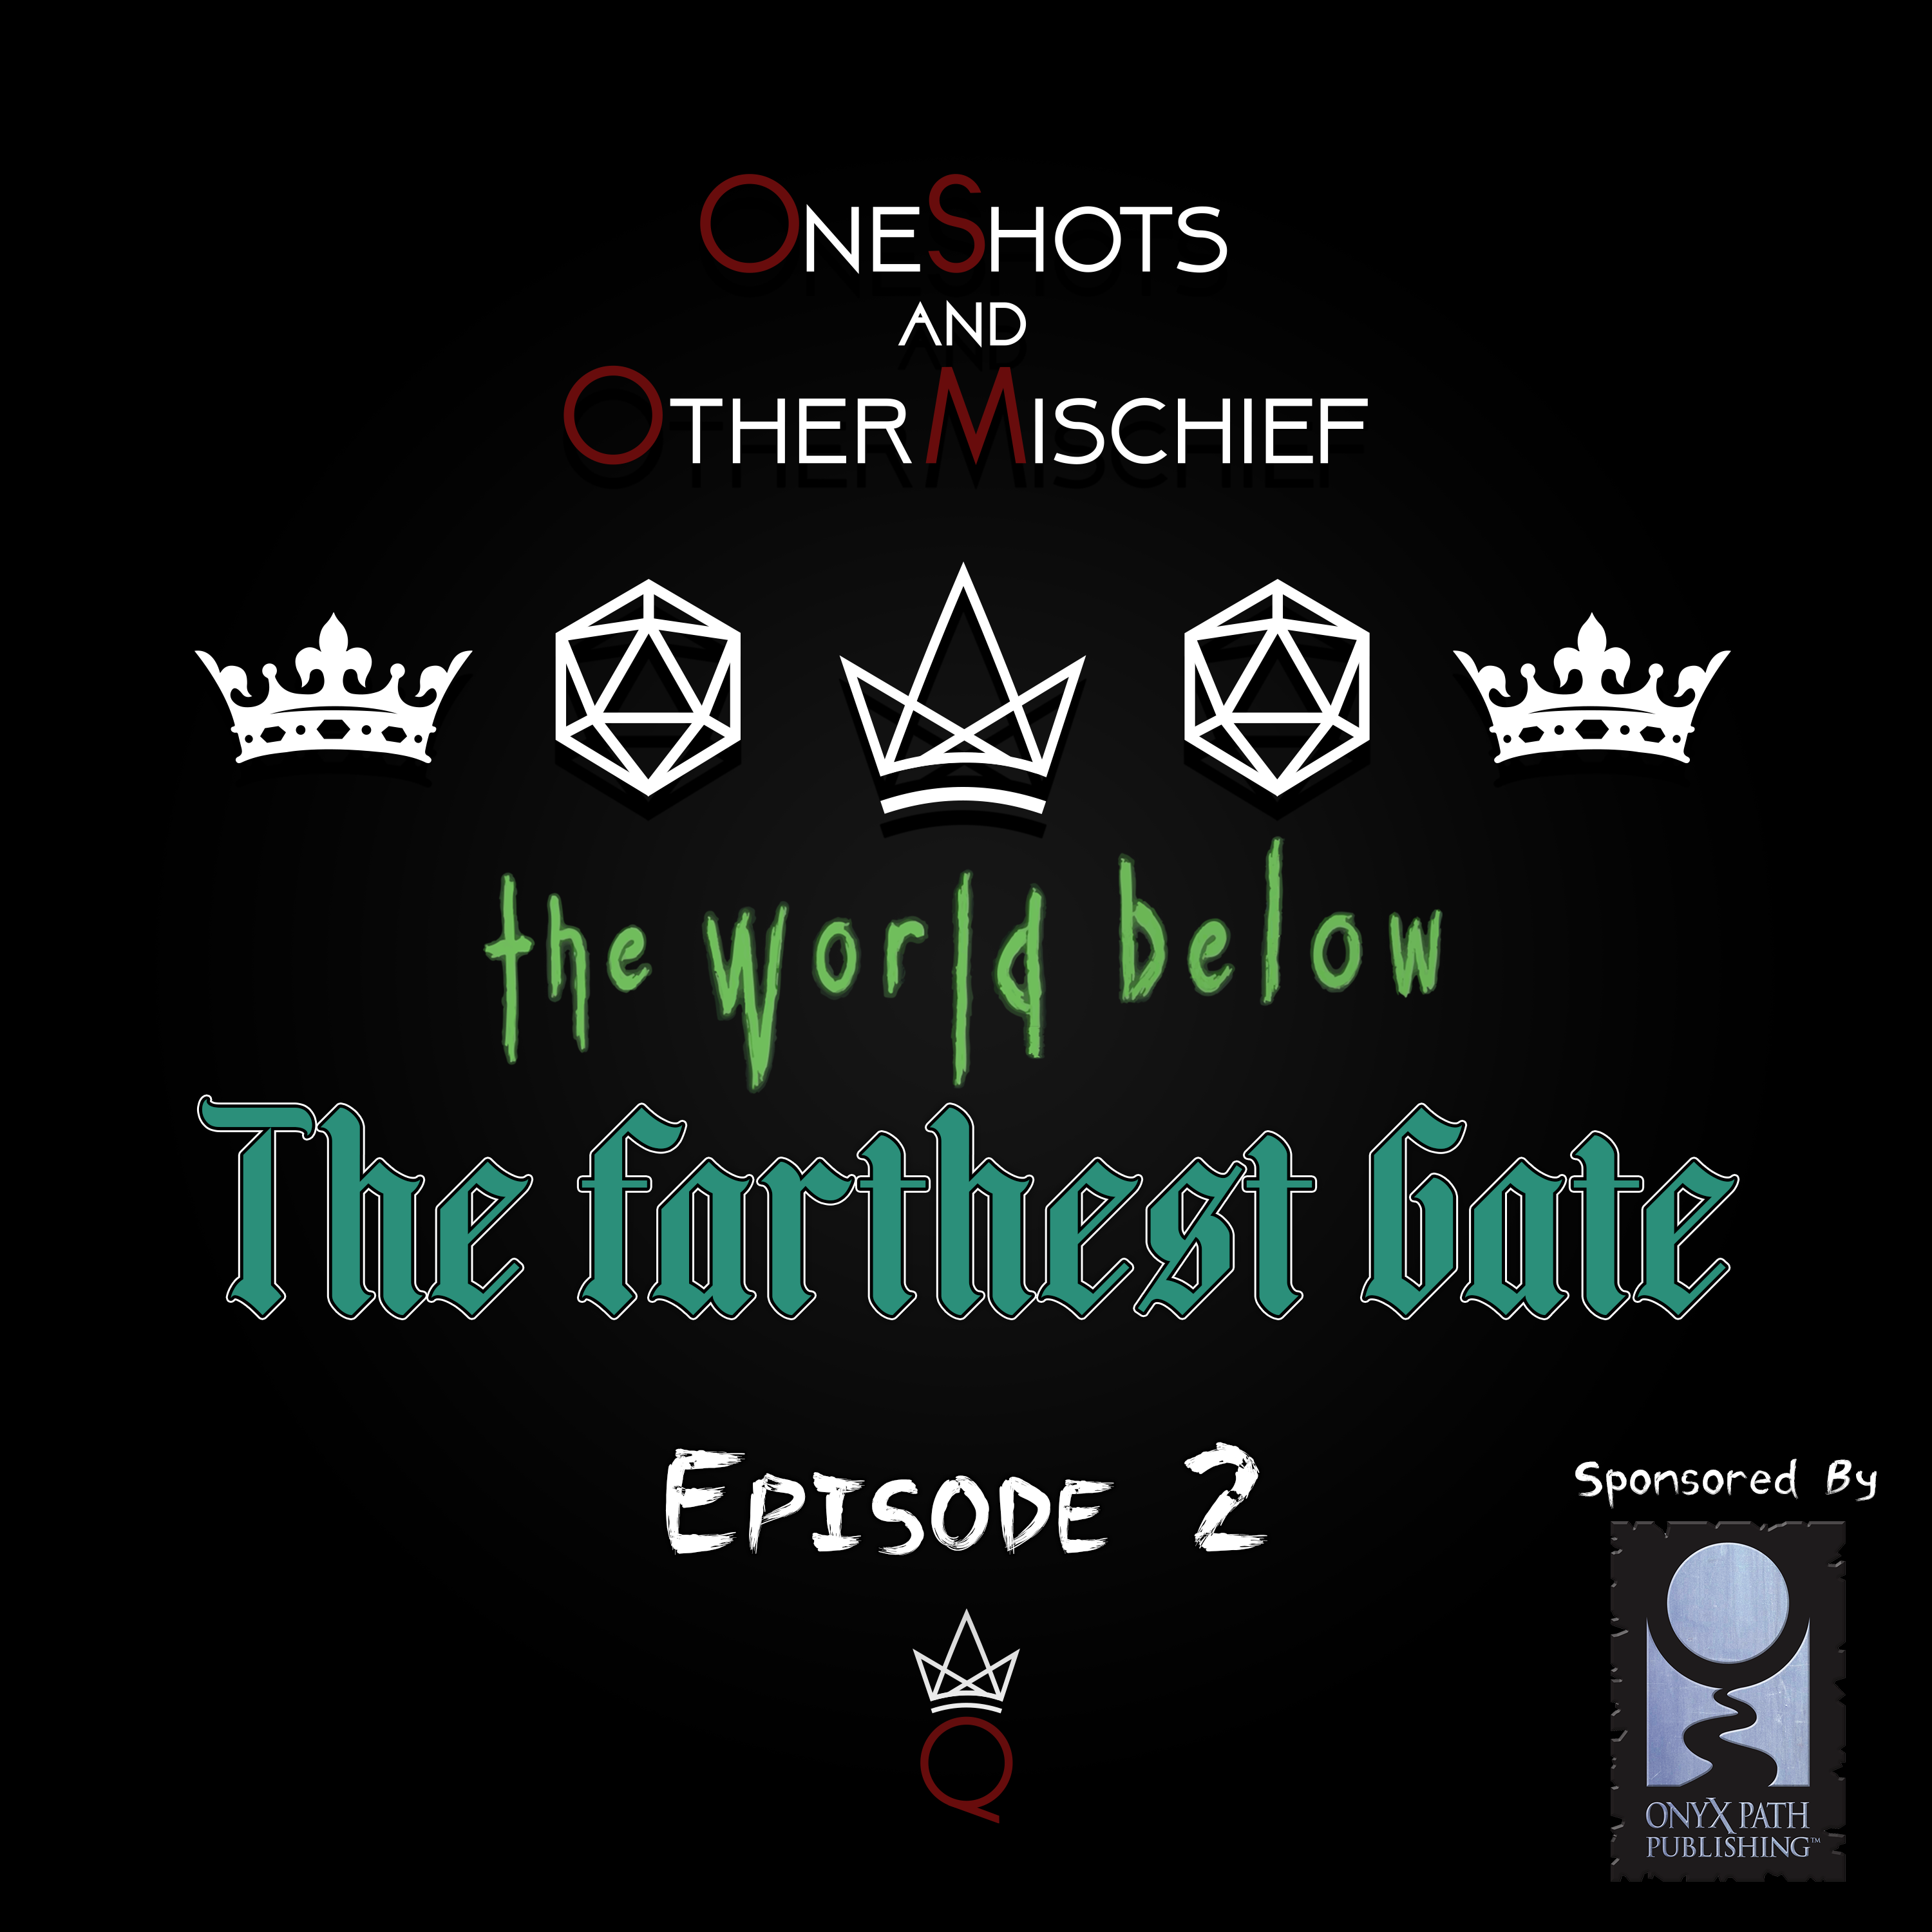 The World Below - The Farthest Gate, Episode 2